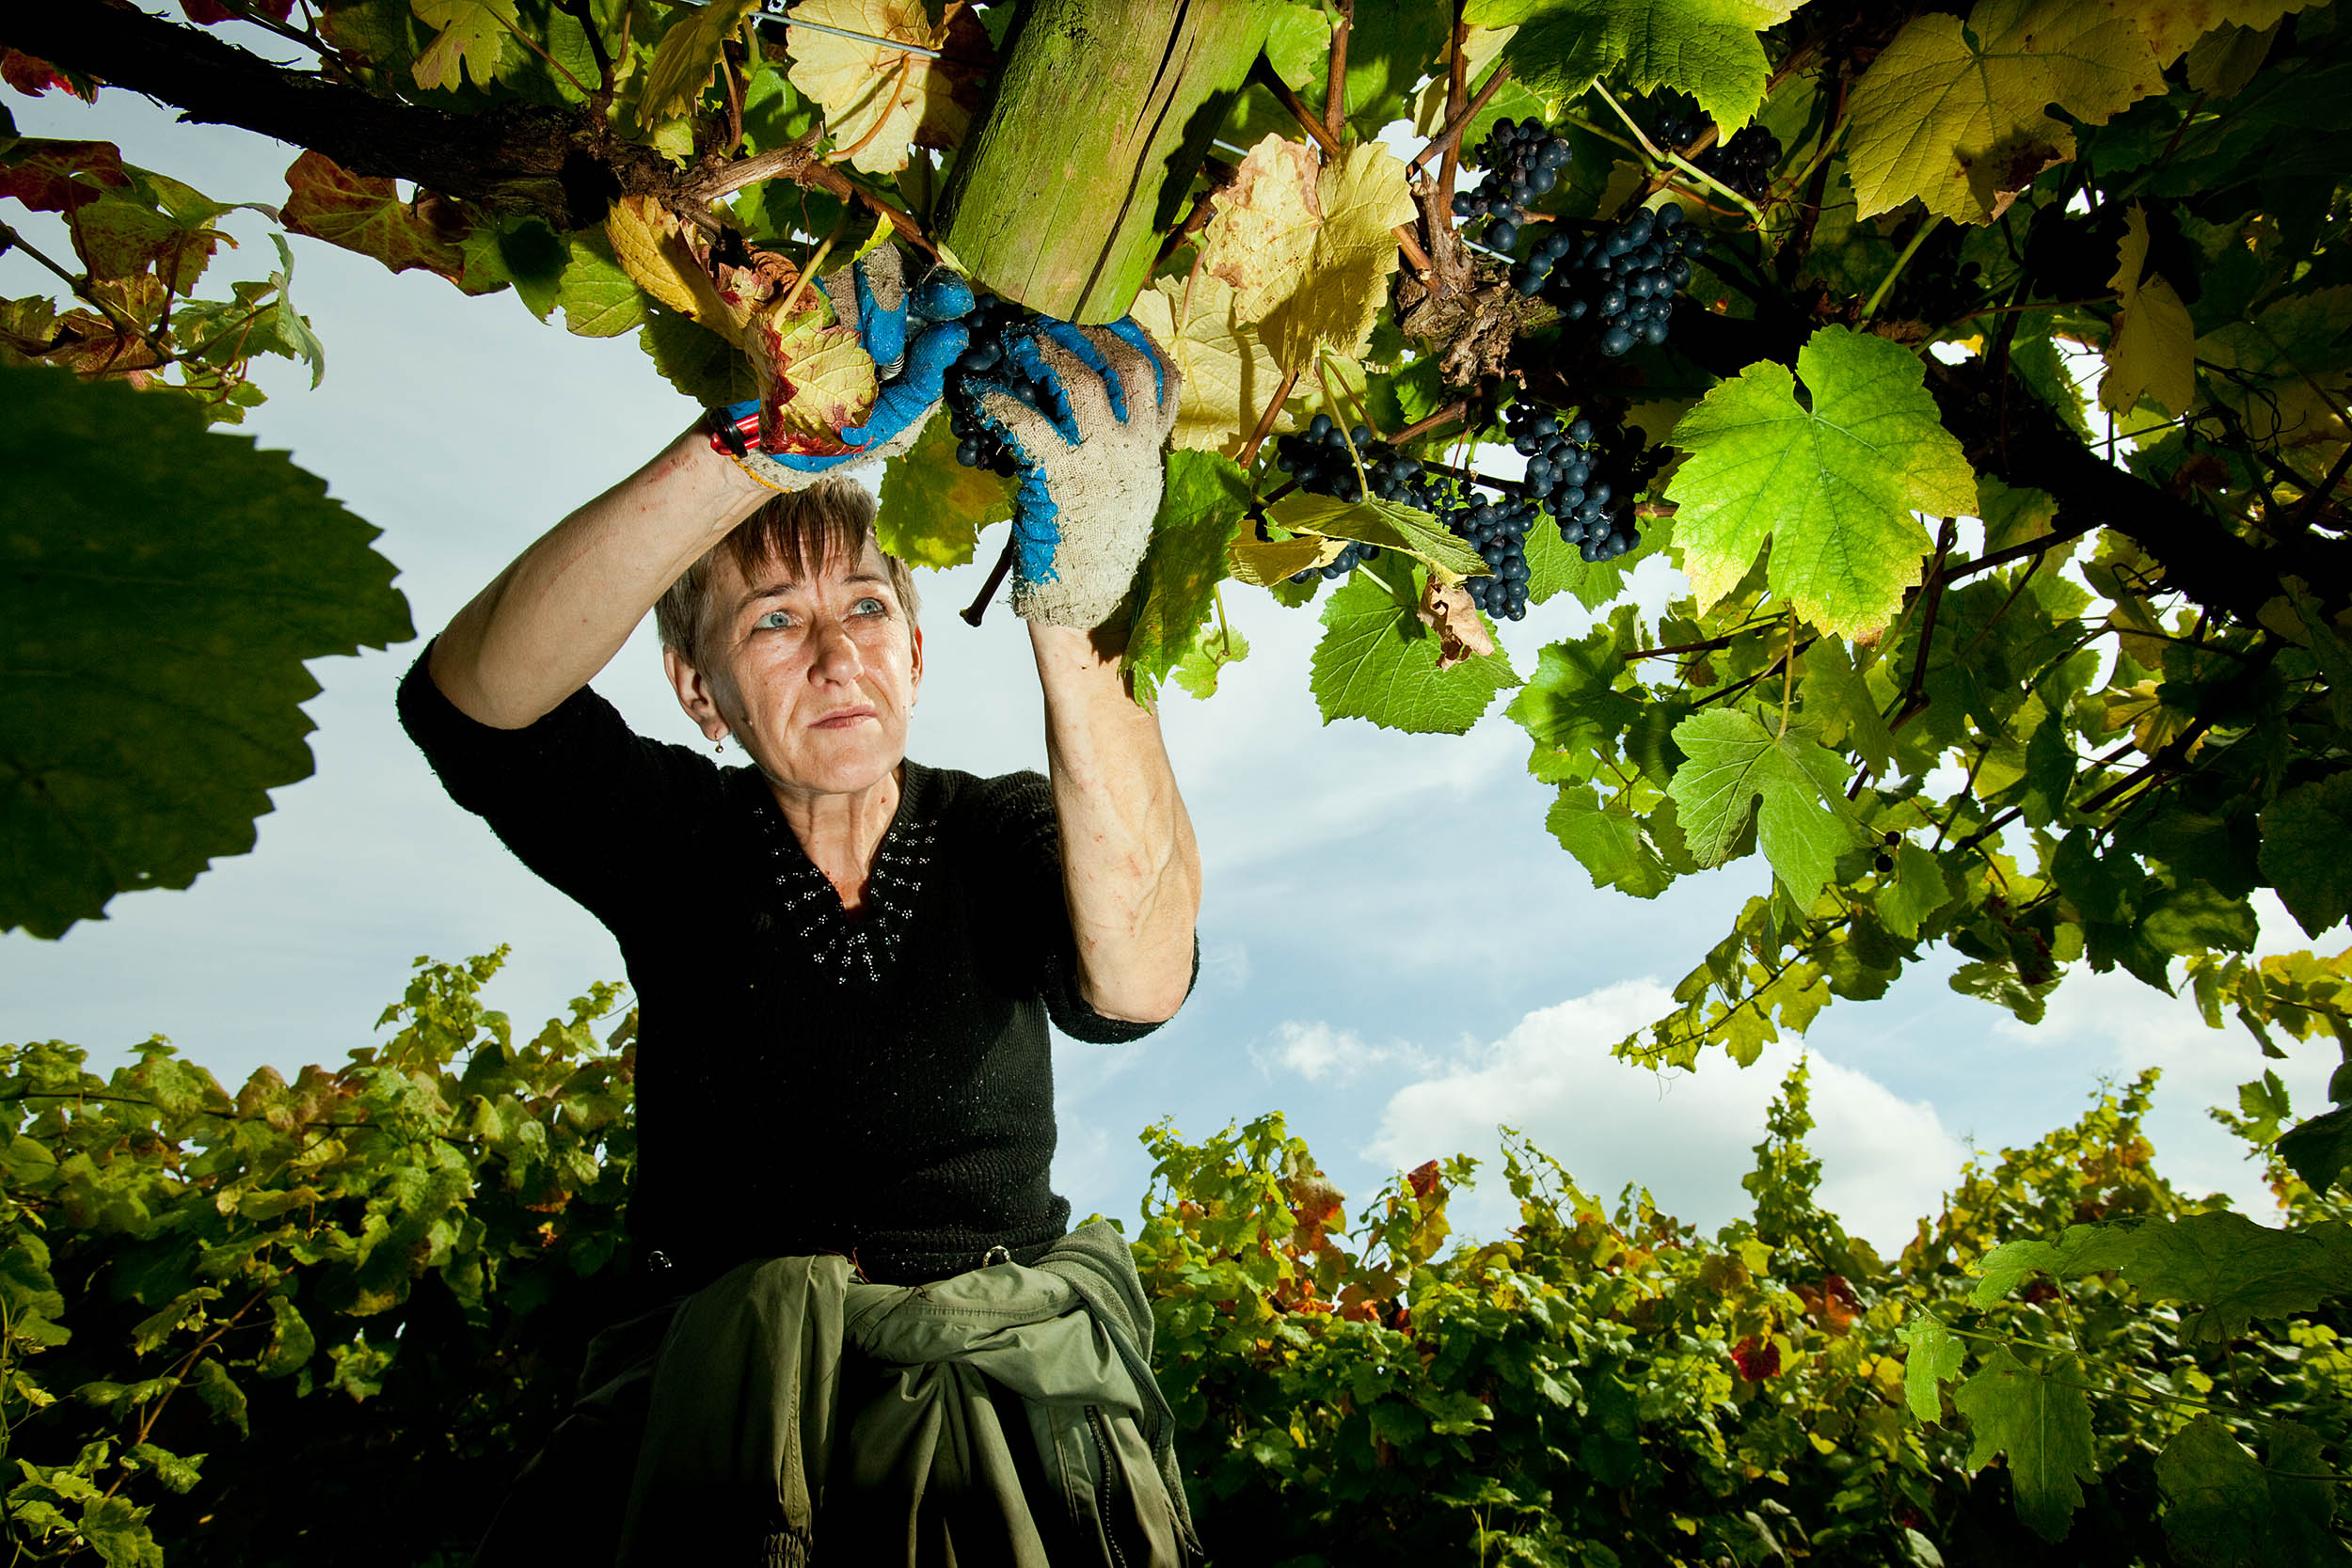  Polish woman at work in an English vineyard 